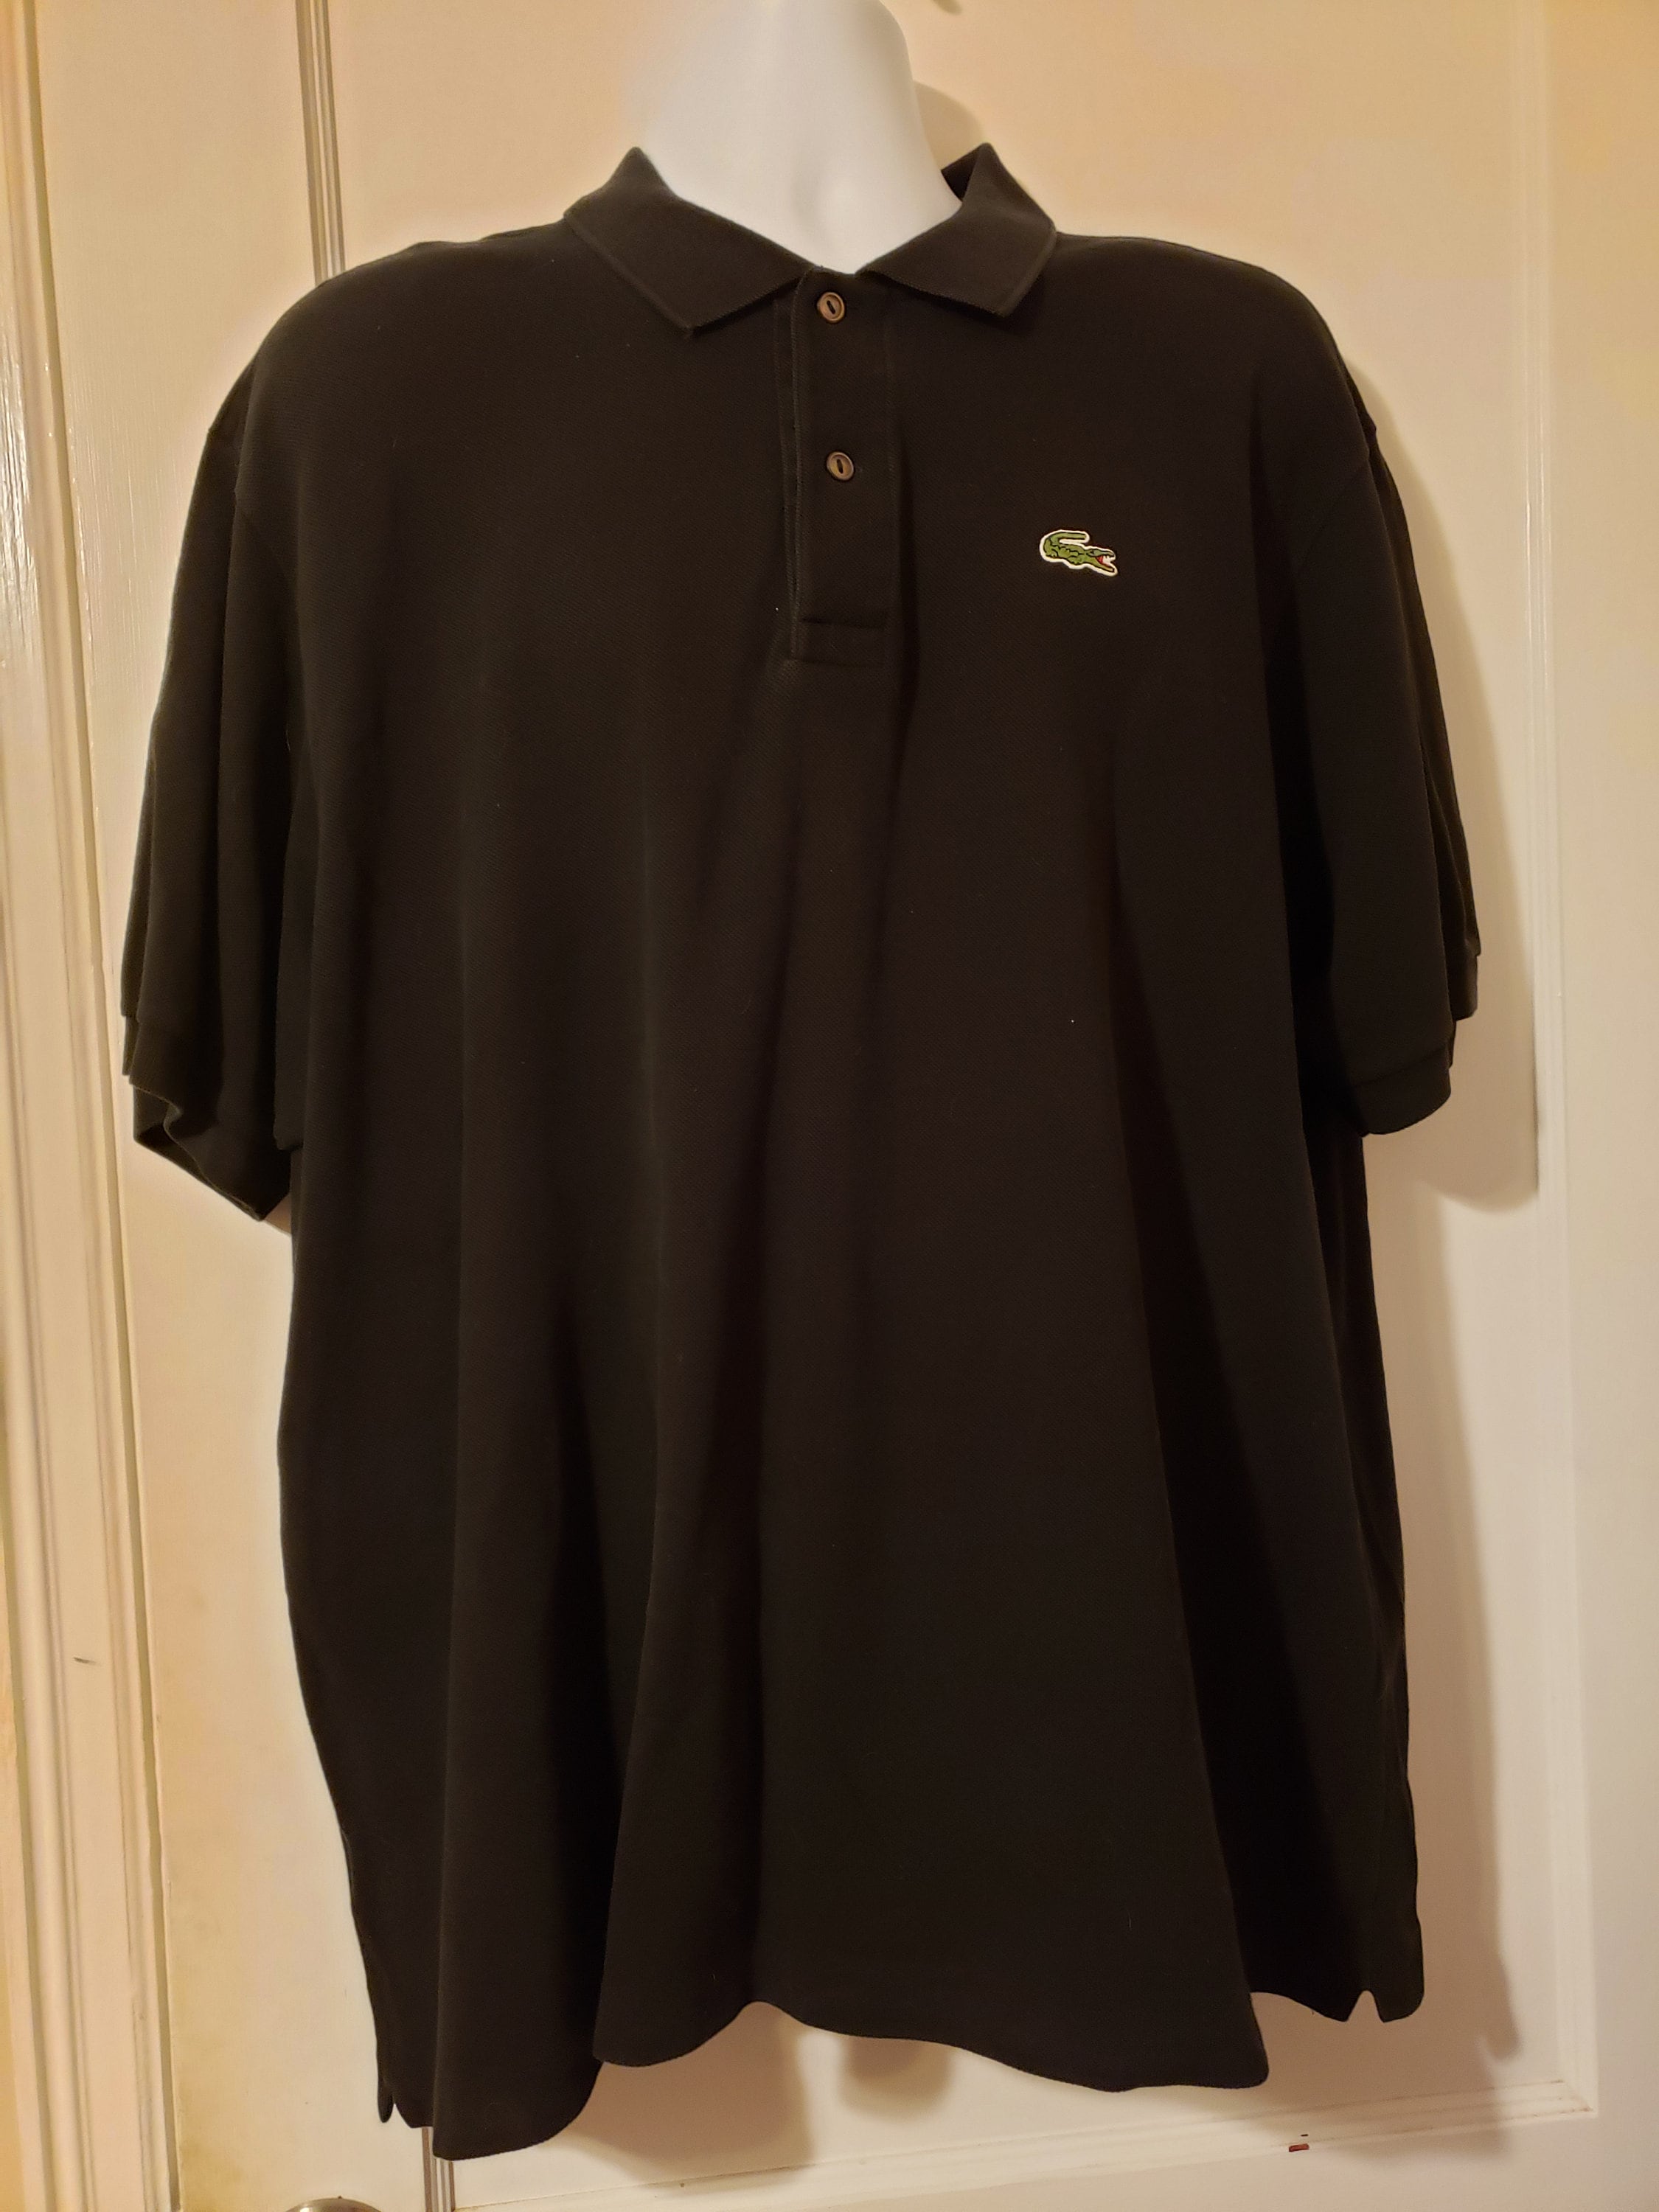 Vintage Lacoste France mens size x-large black polo shirt